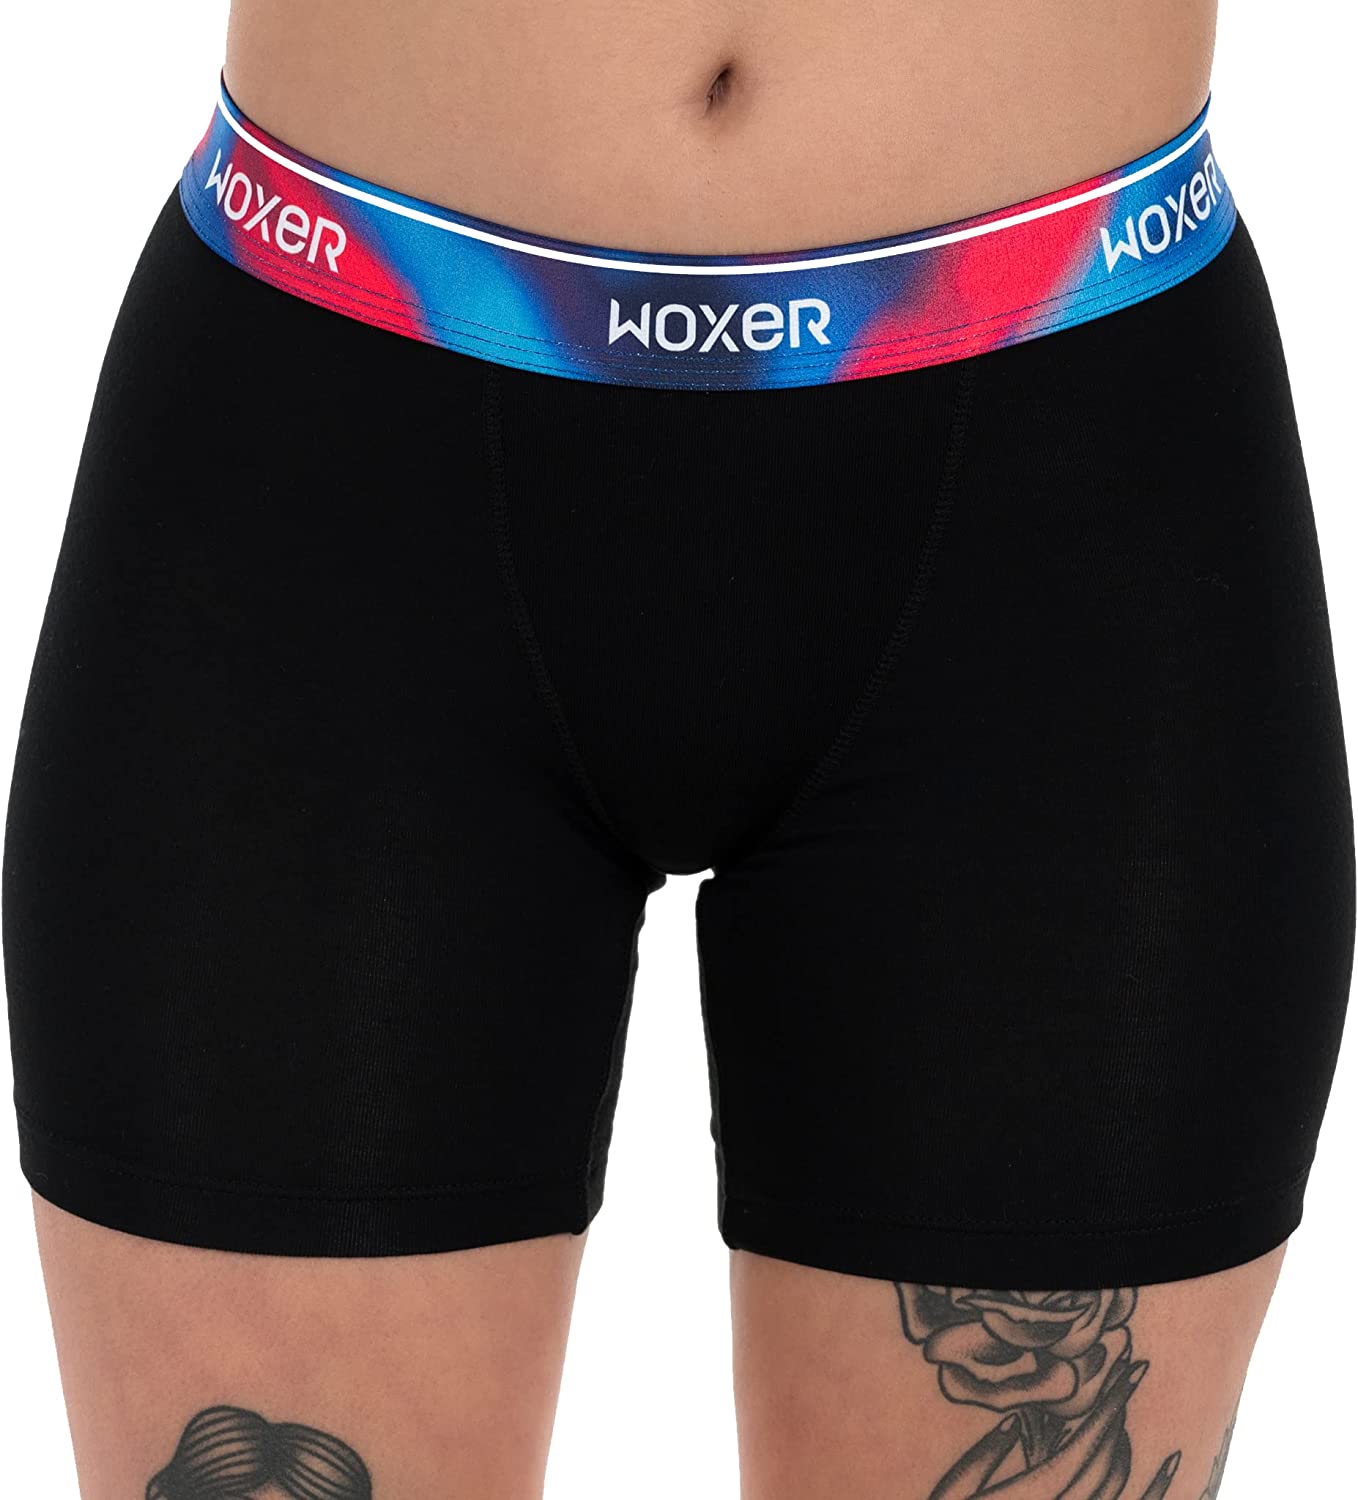 Buy Woxer Boxer For Women online